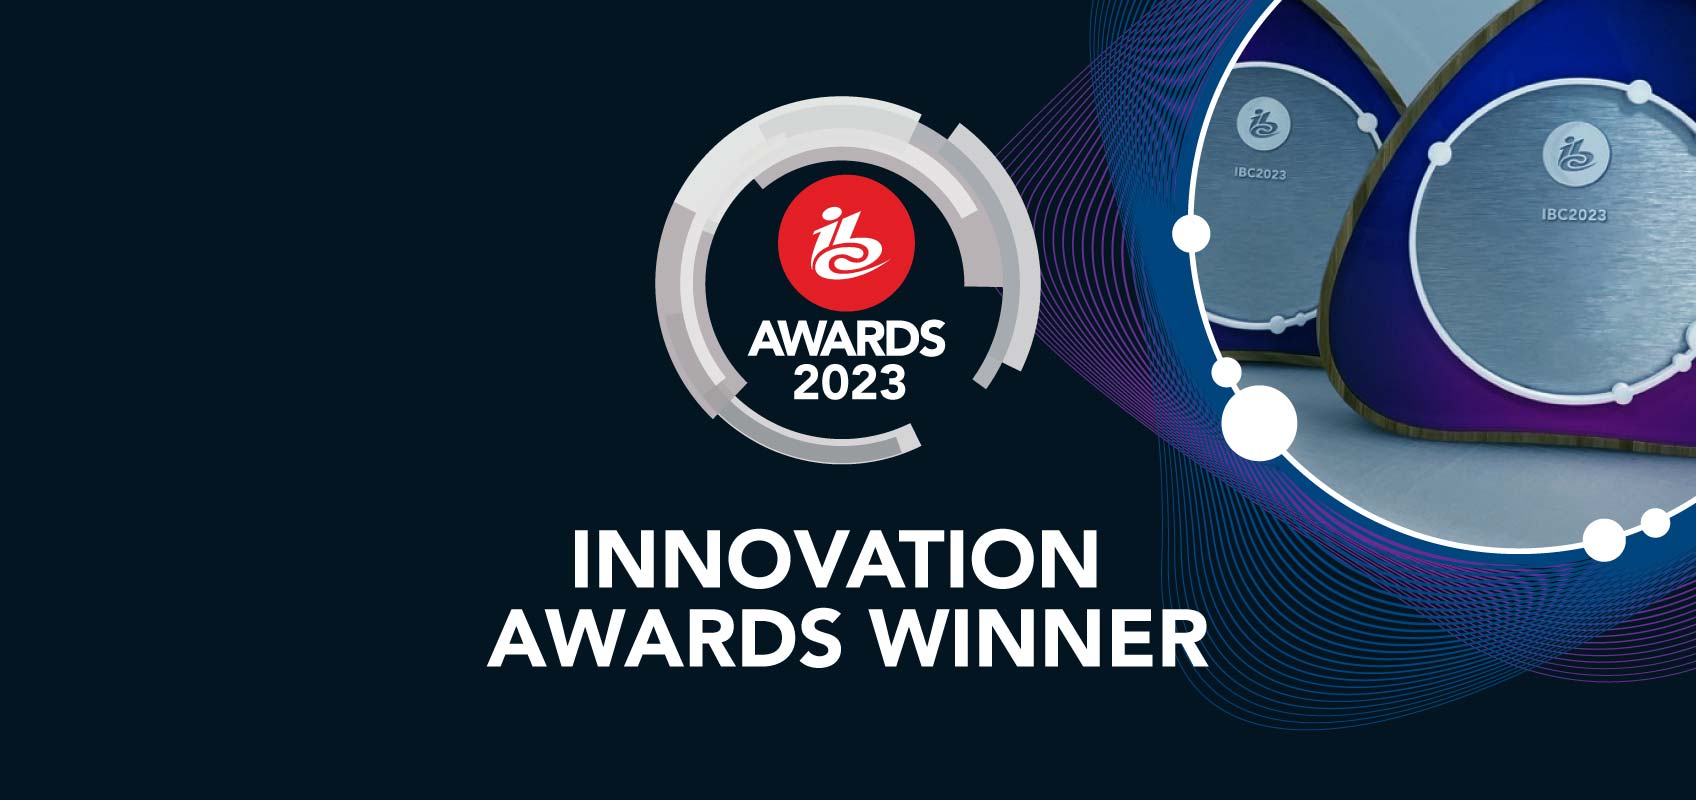 Haivision Wins Prestigious 'Innovation Award' at this Year's IBC